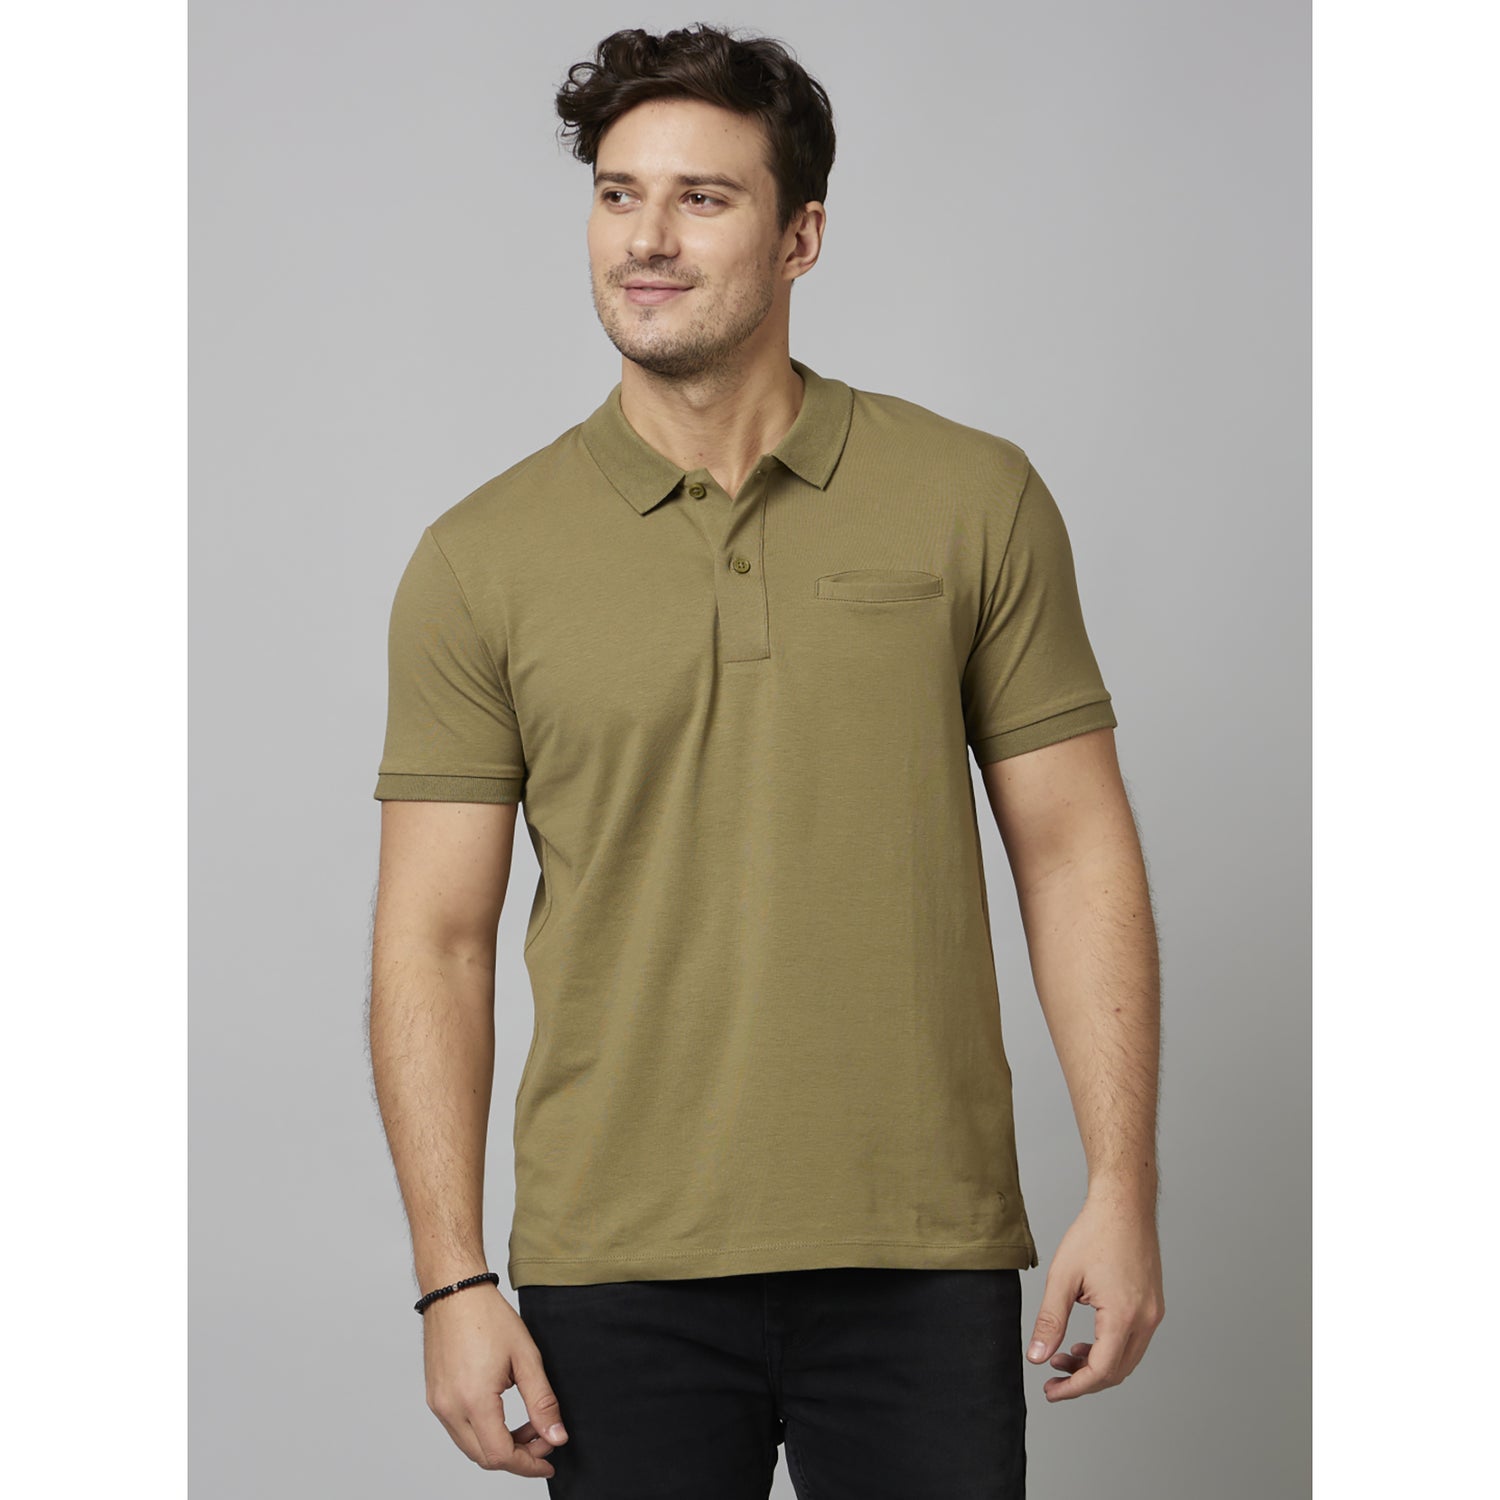 Khaki Solid Short Sleeve Cotton Poly Blend T-Shirts (DECOULE)